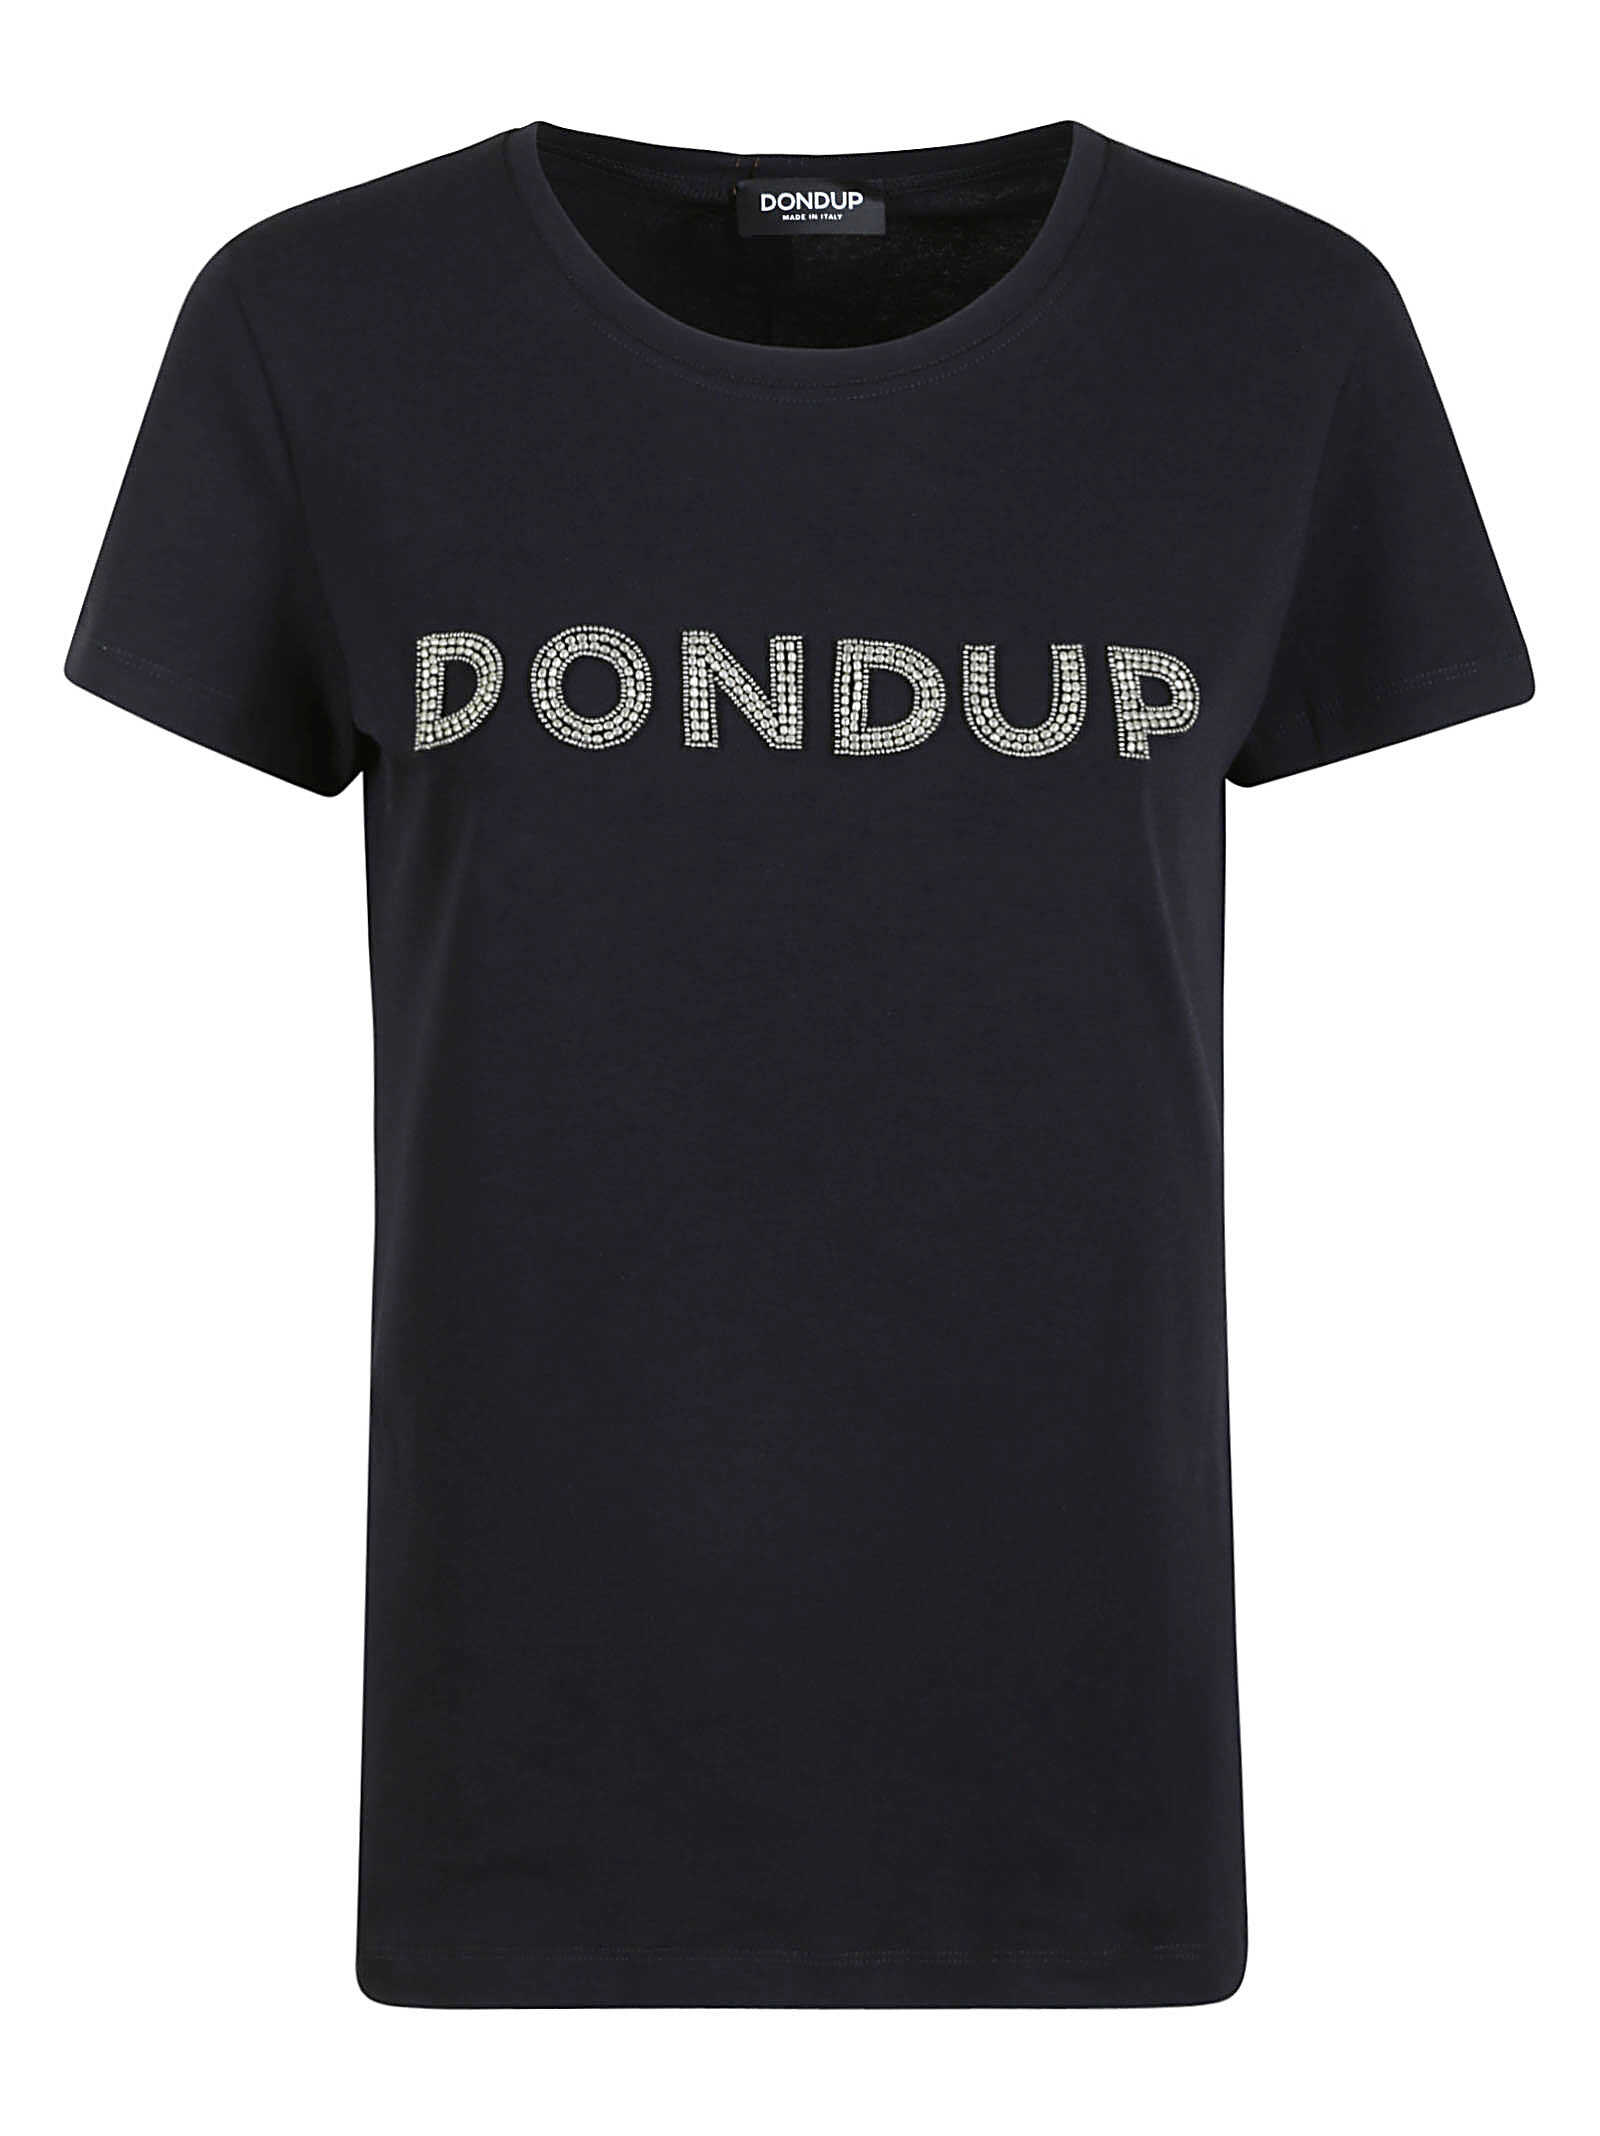 Dondup Dondup t shirt S007.JS0241D 000 White Black